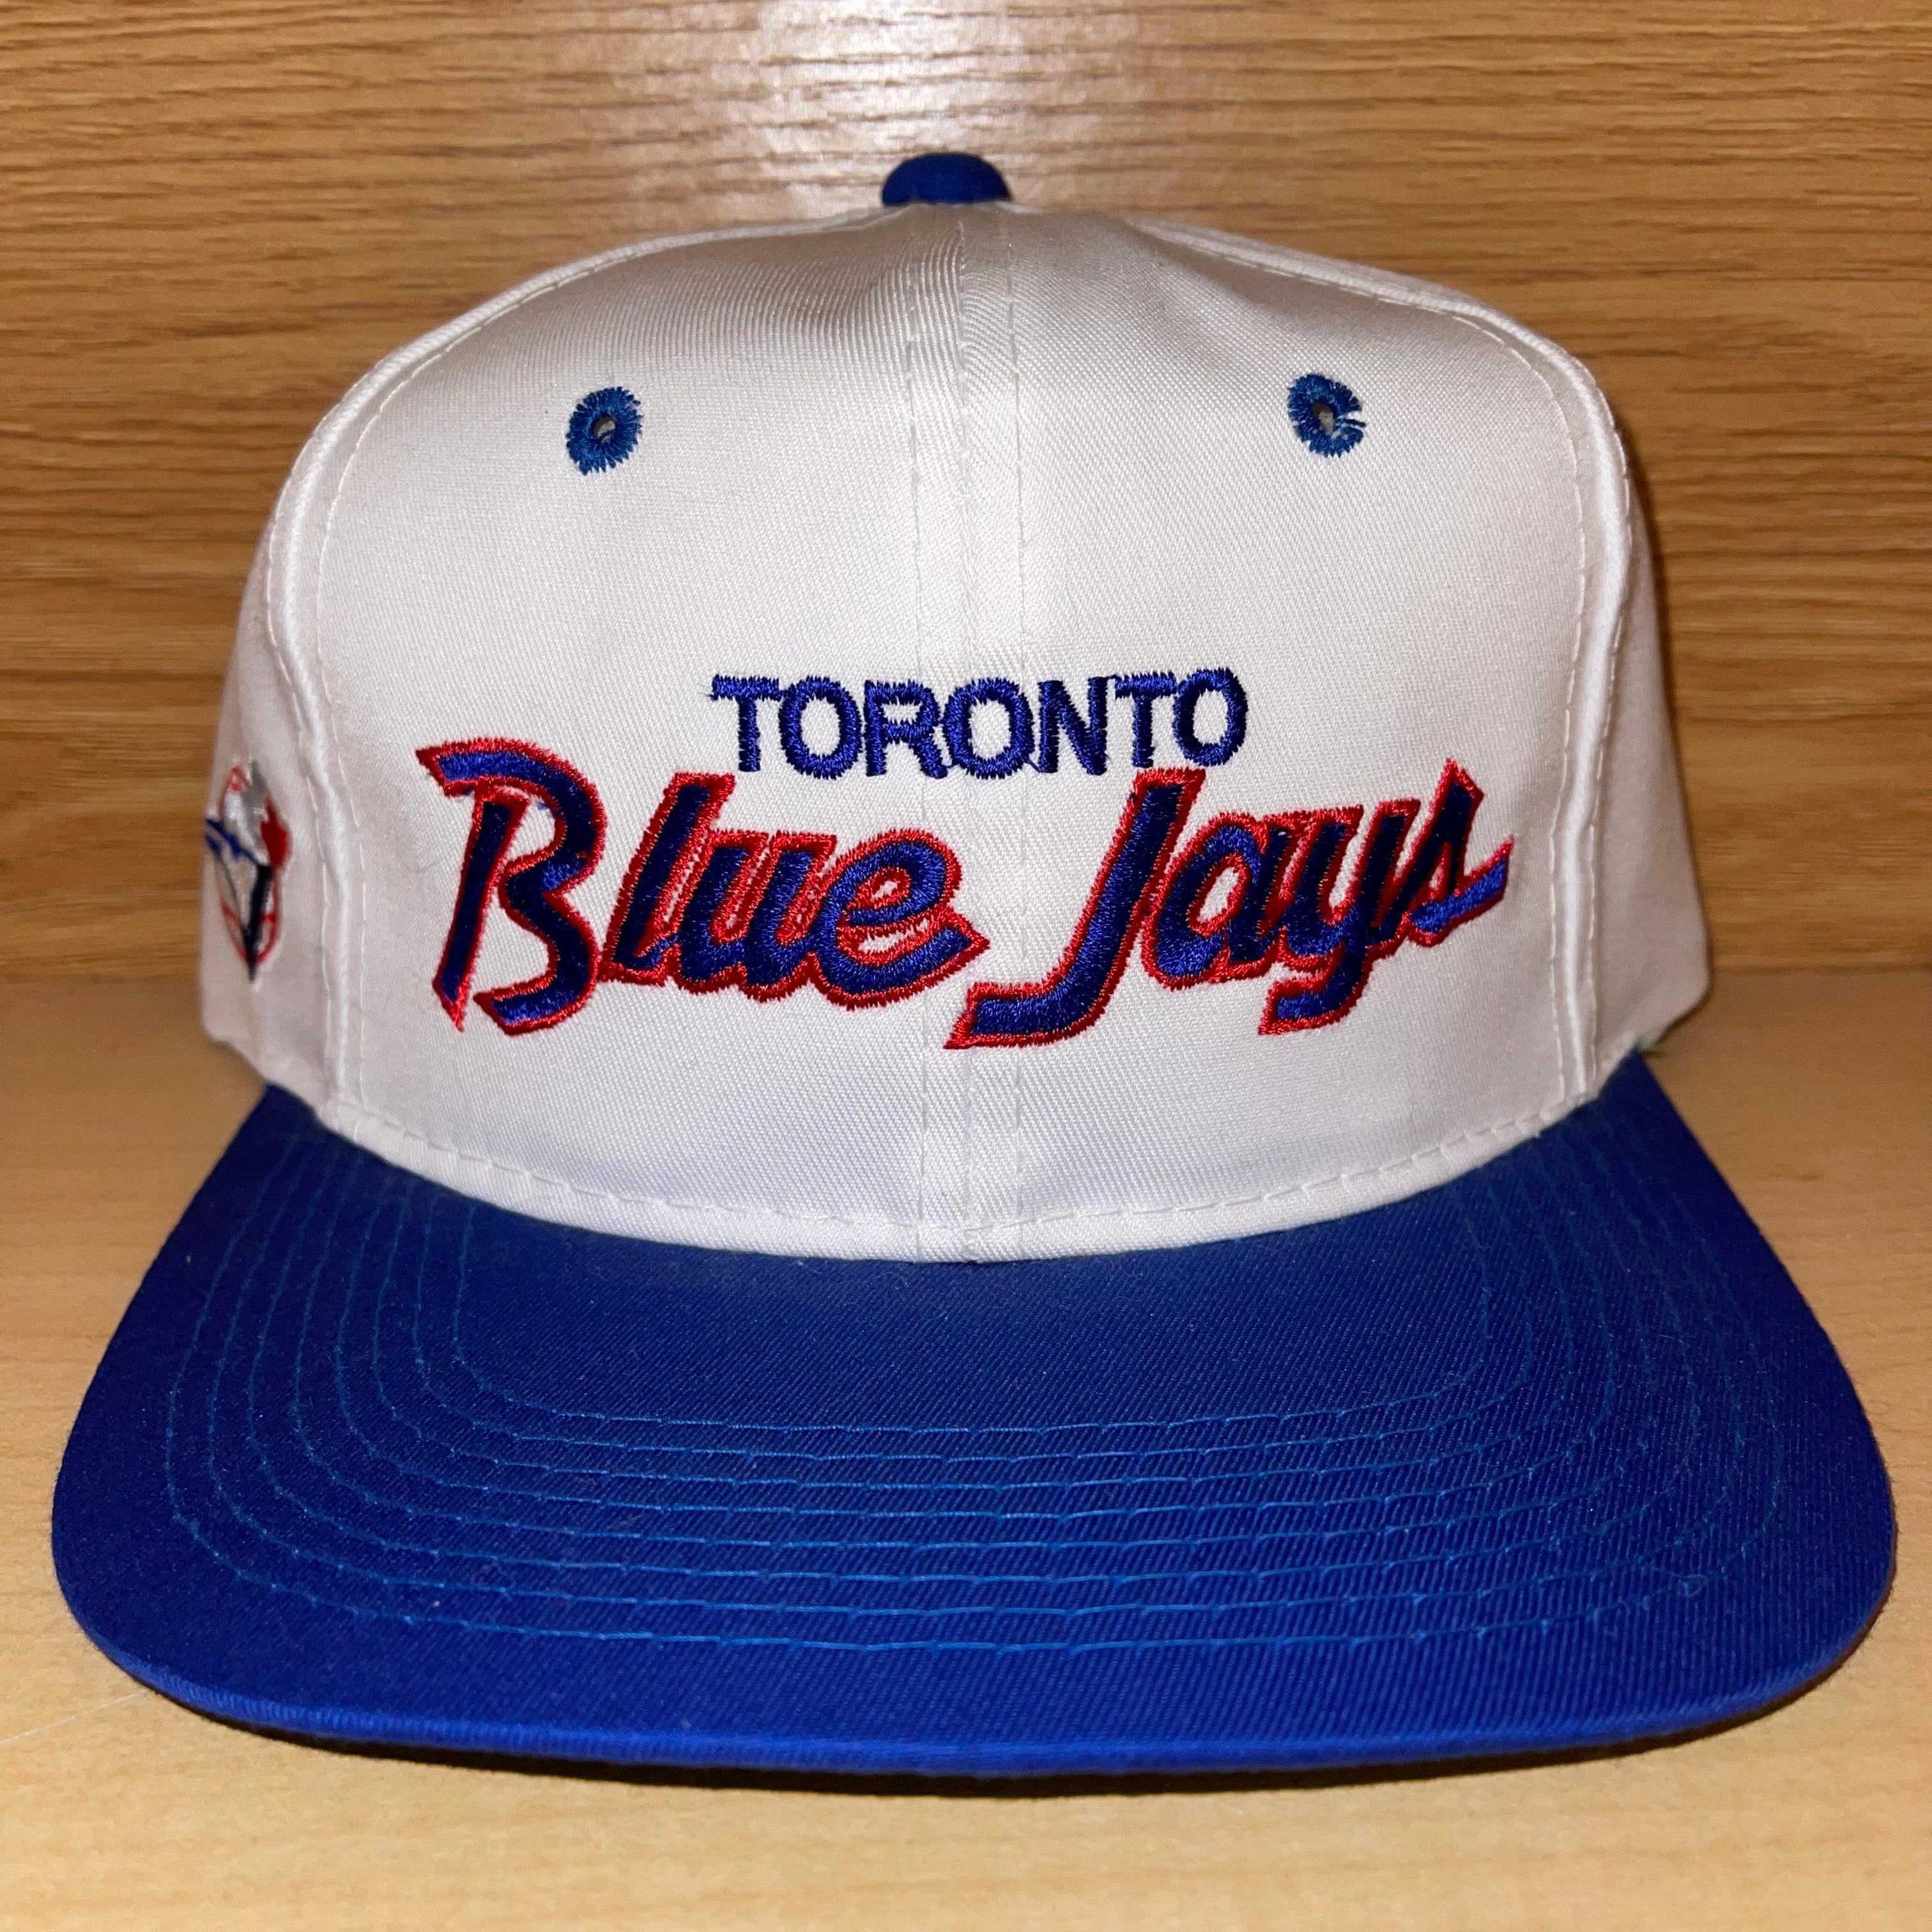 retro blue jays hat